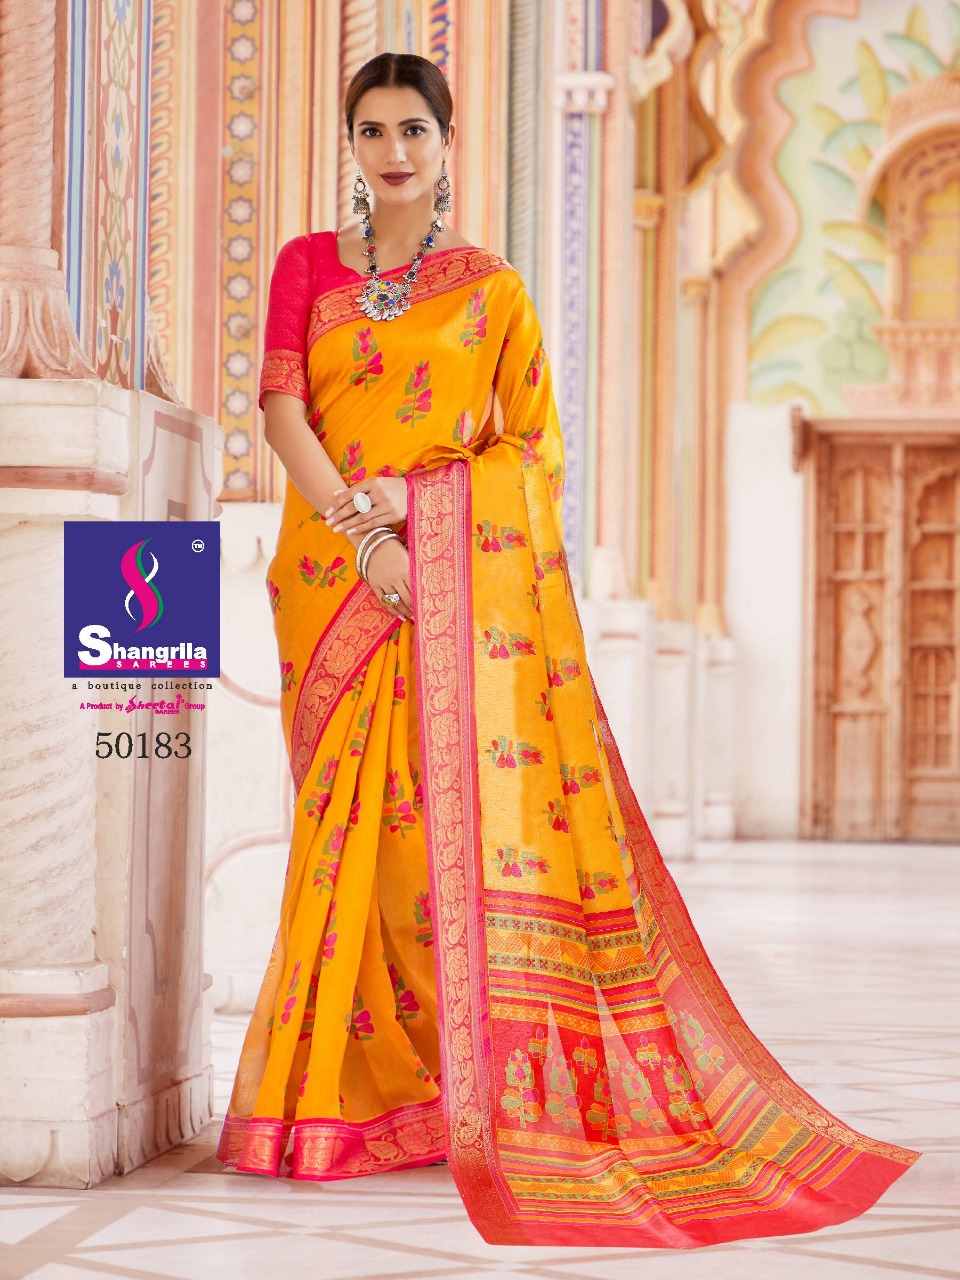 Shangrila Kanjivaram silk vol 13 colorful collection of sarres